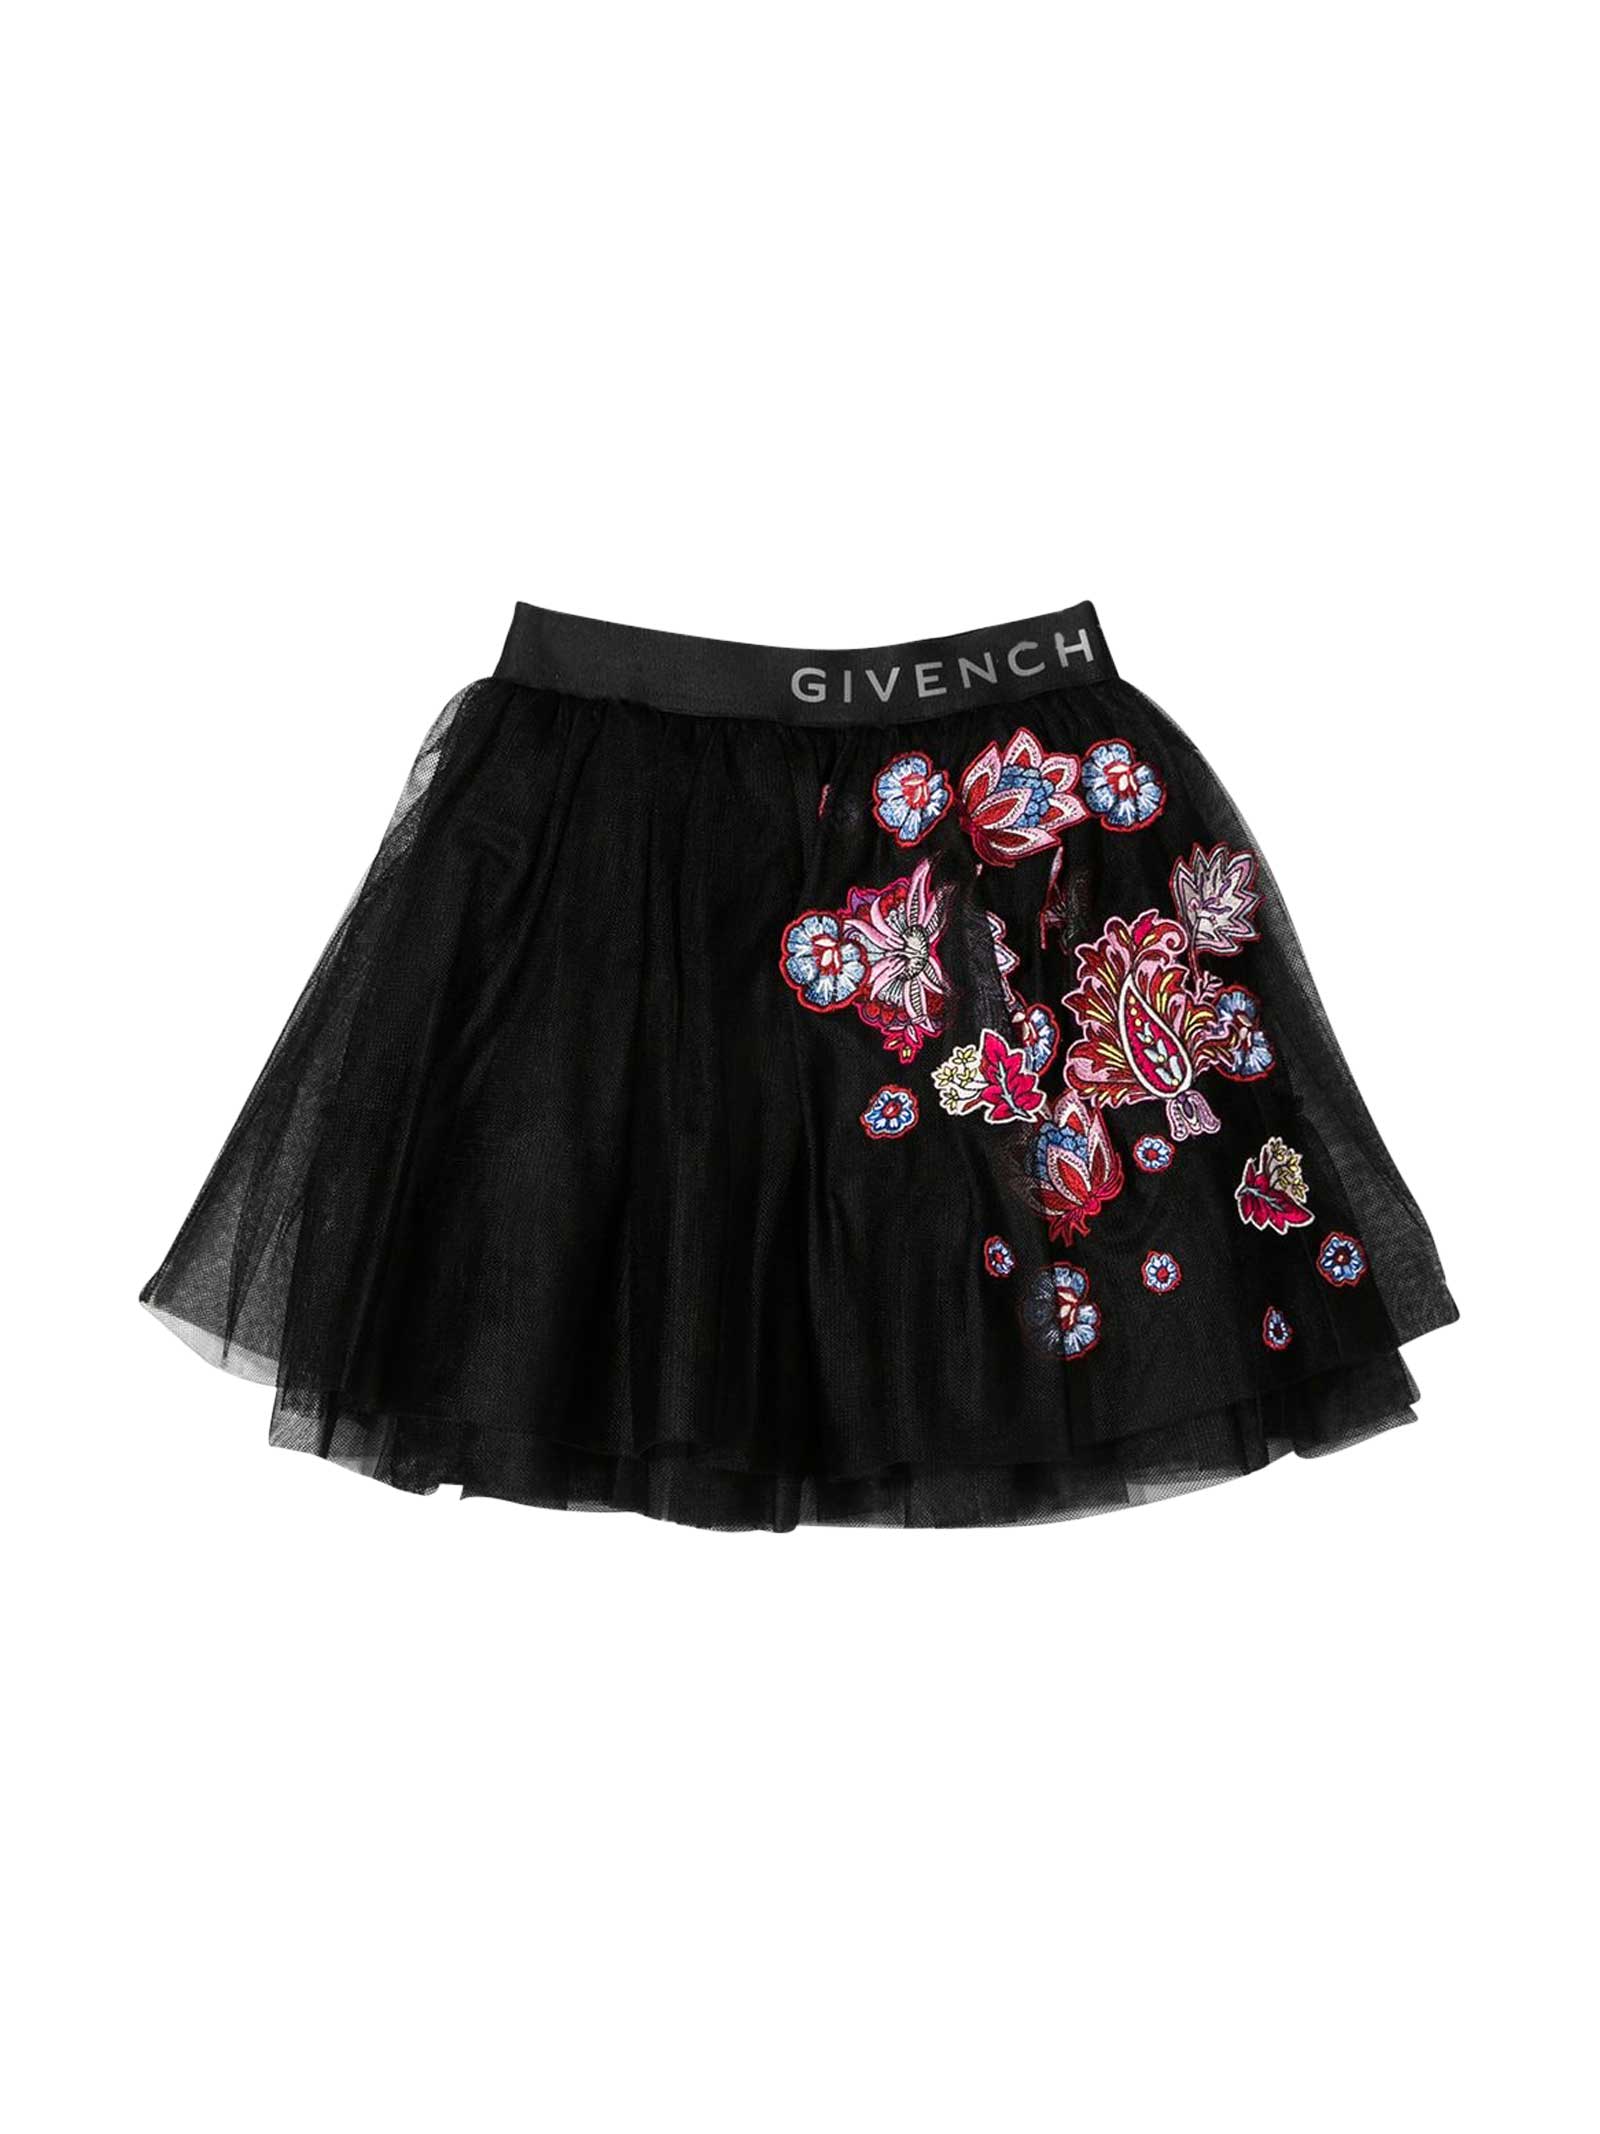 Givenchy Black Skirt Teen